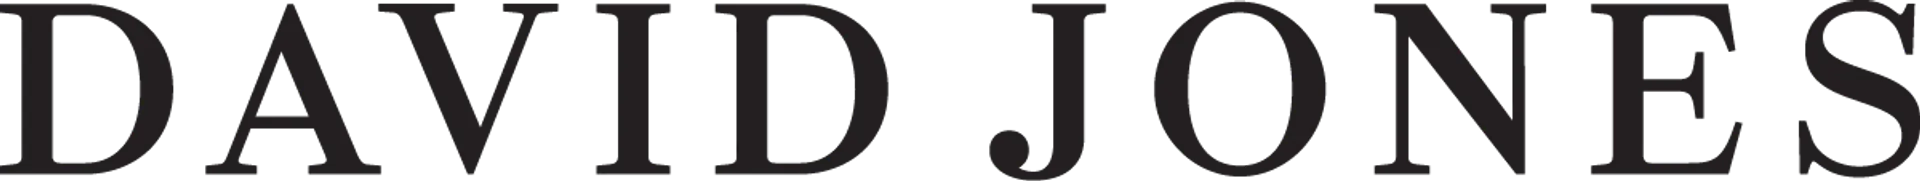 DAVID JONES logo of current catalogue